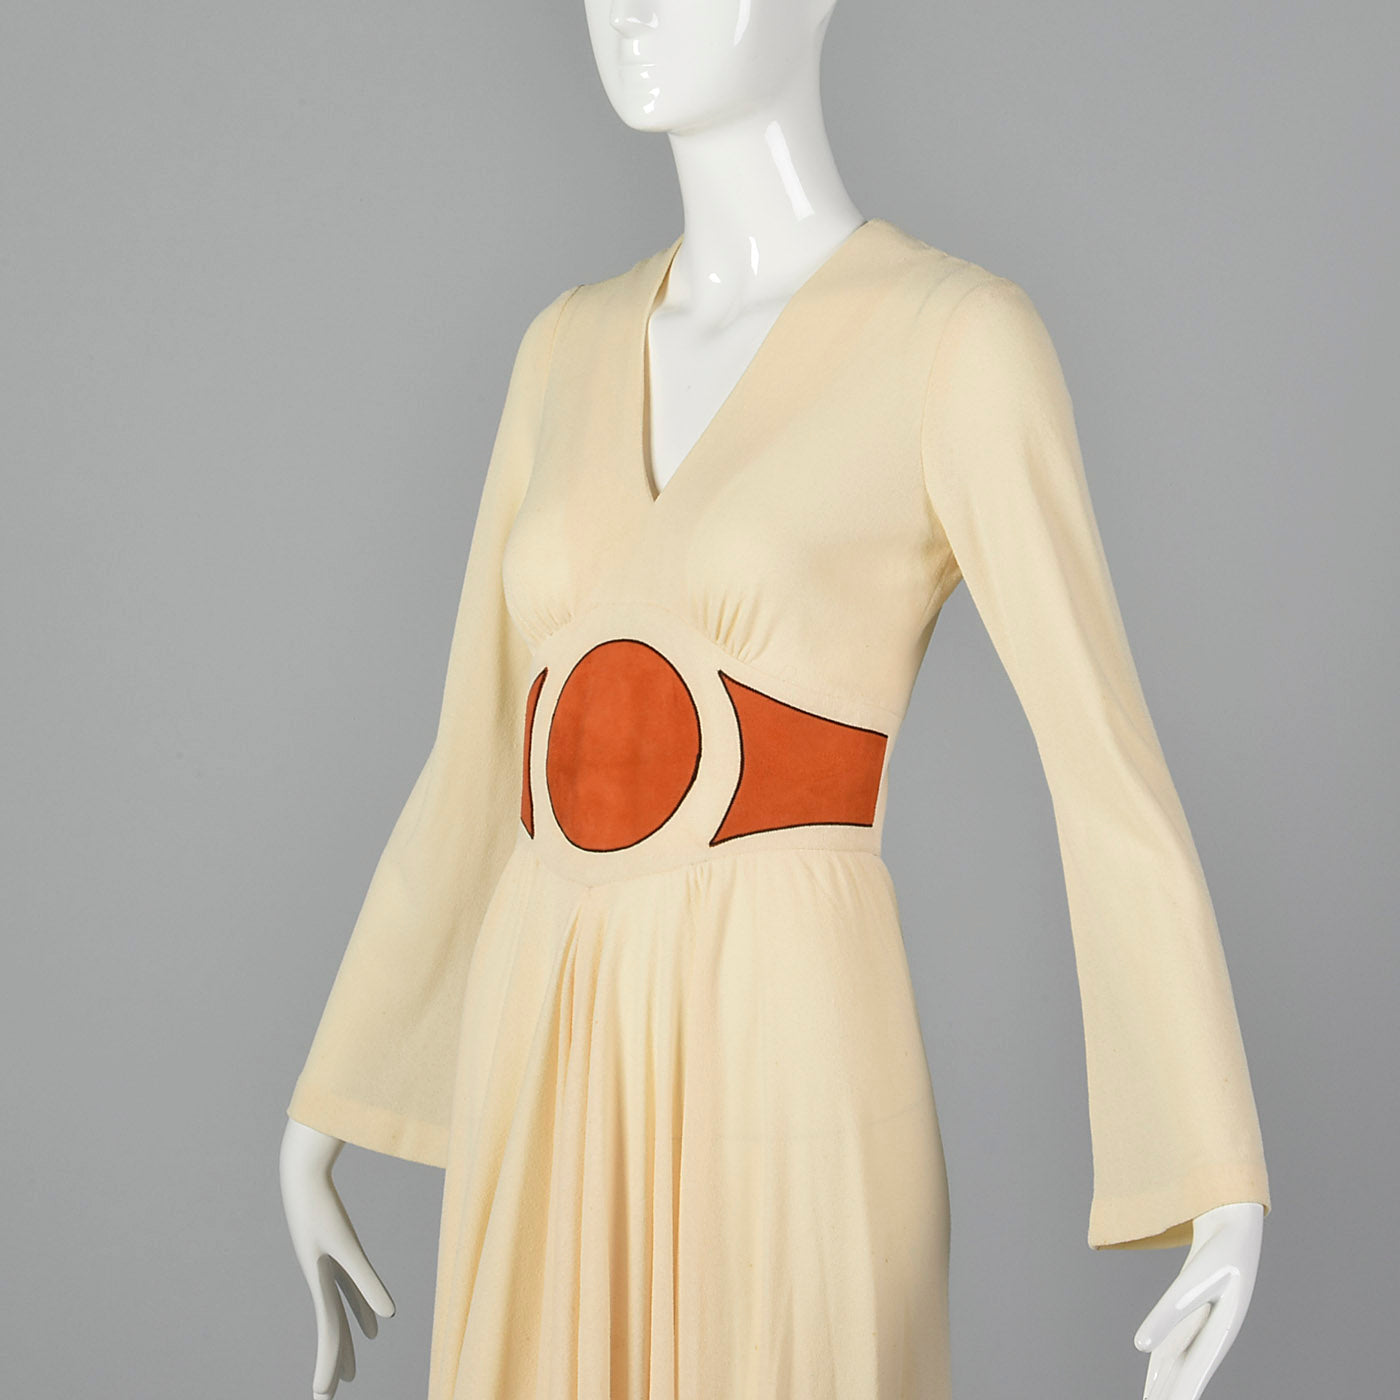 1970s Asymmetric Cream Dress with Suede Applique